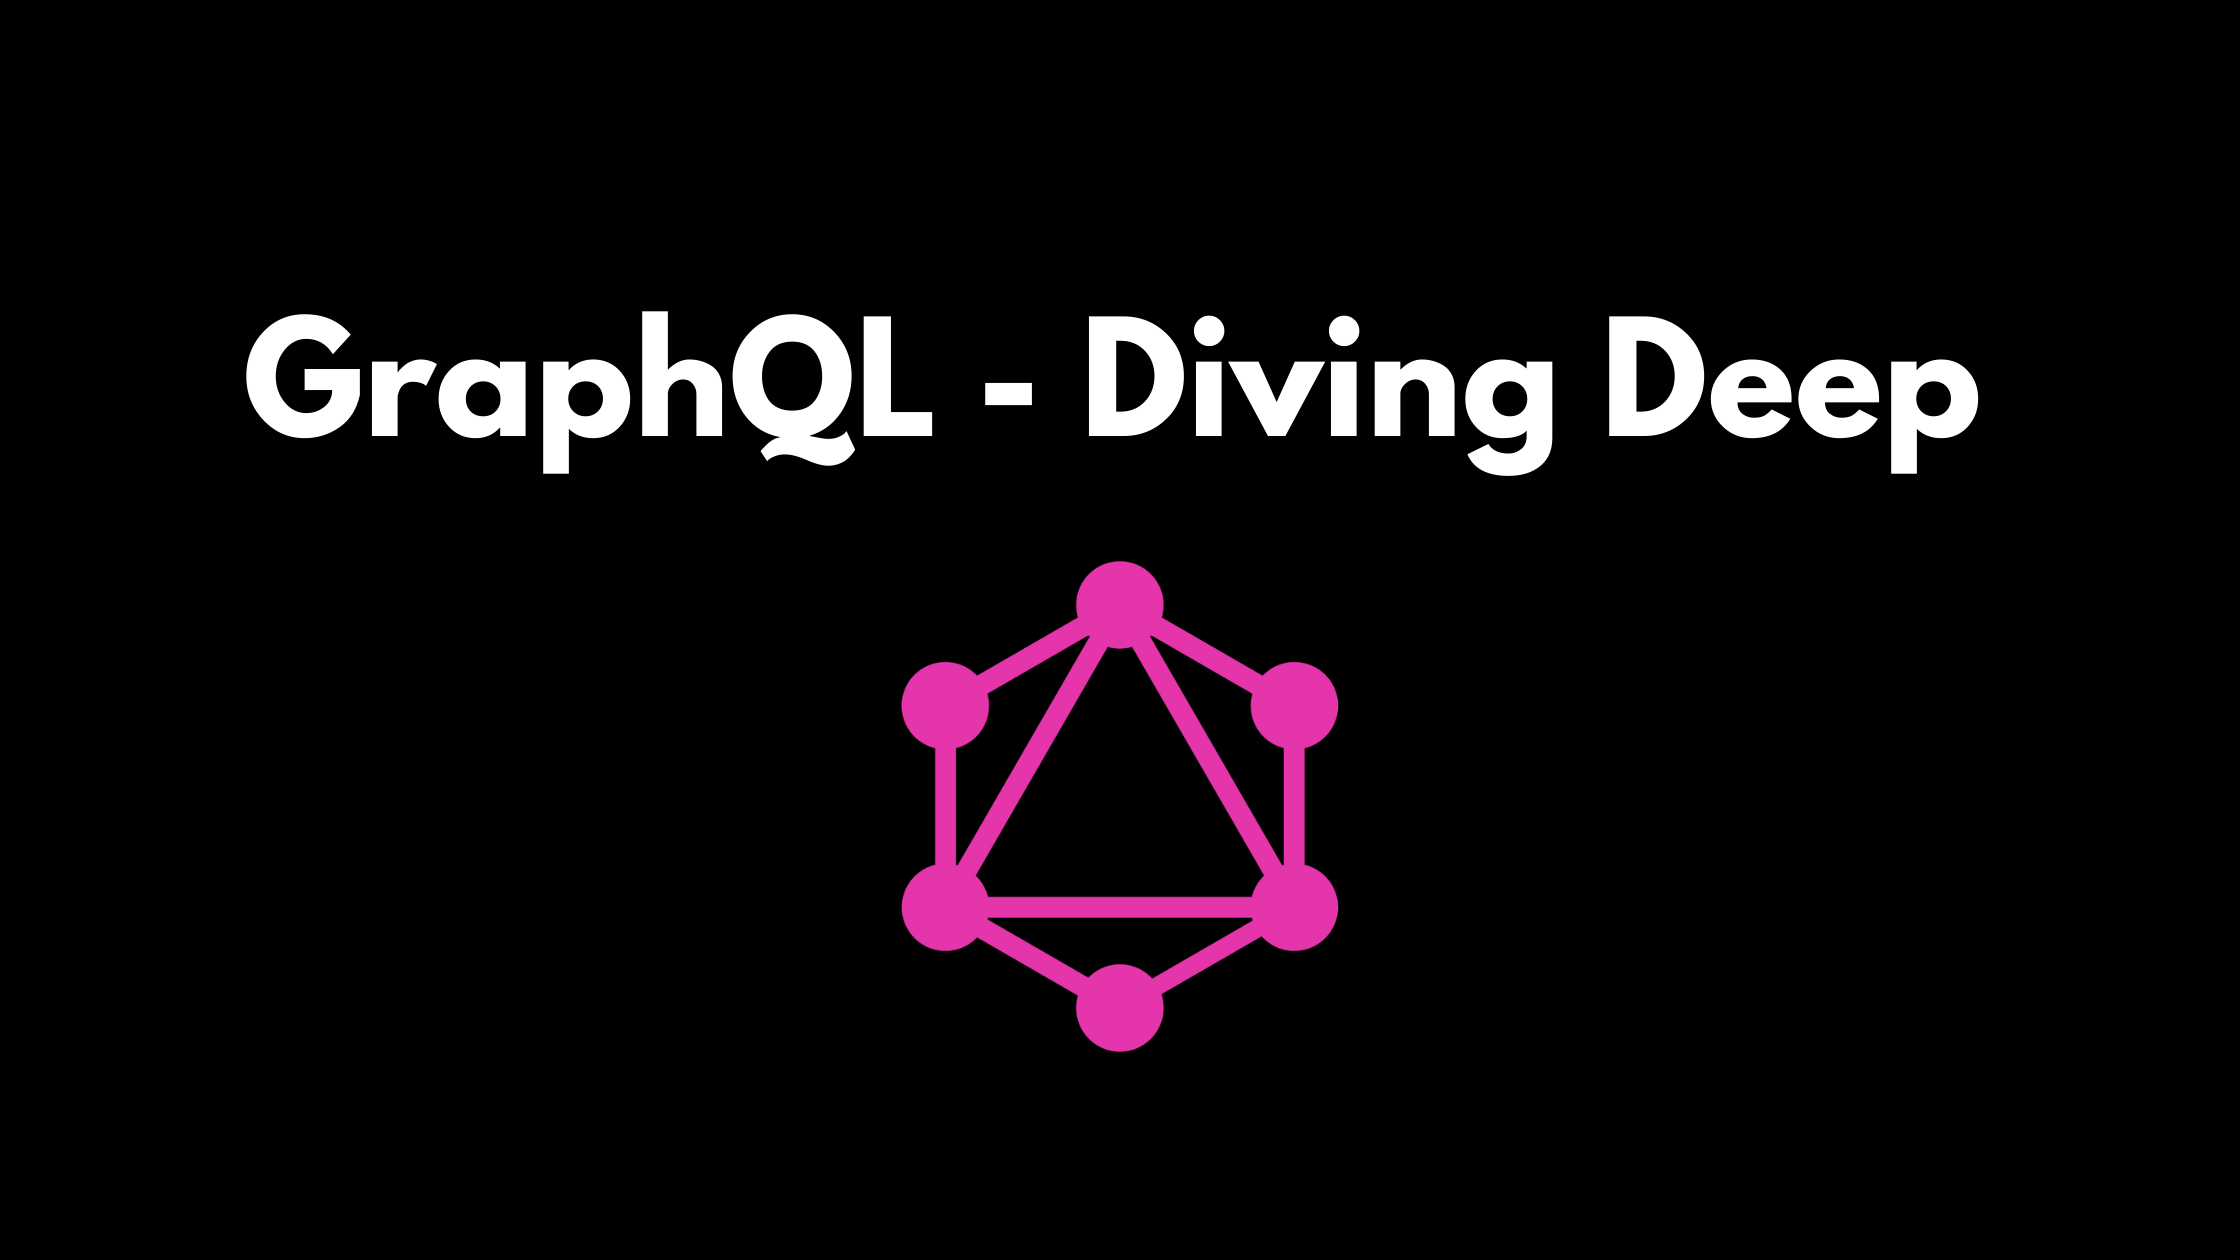 GraphQL - Diving Deep - The Guild Blog